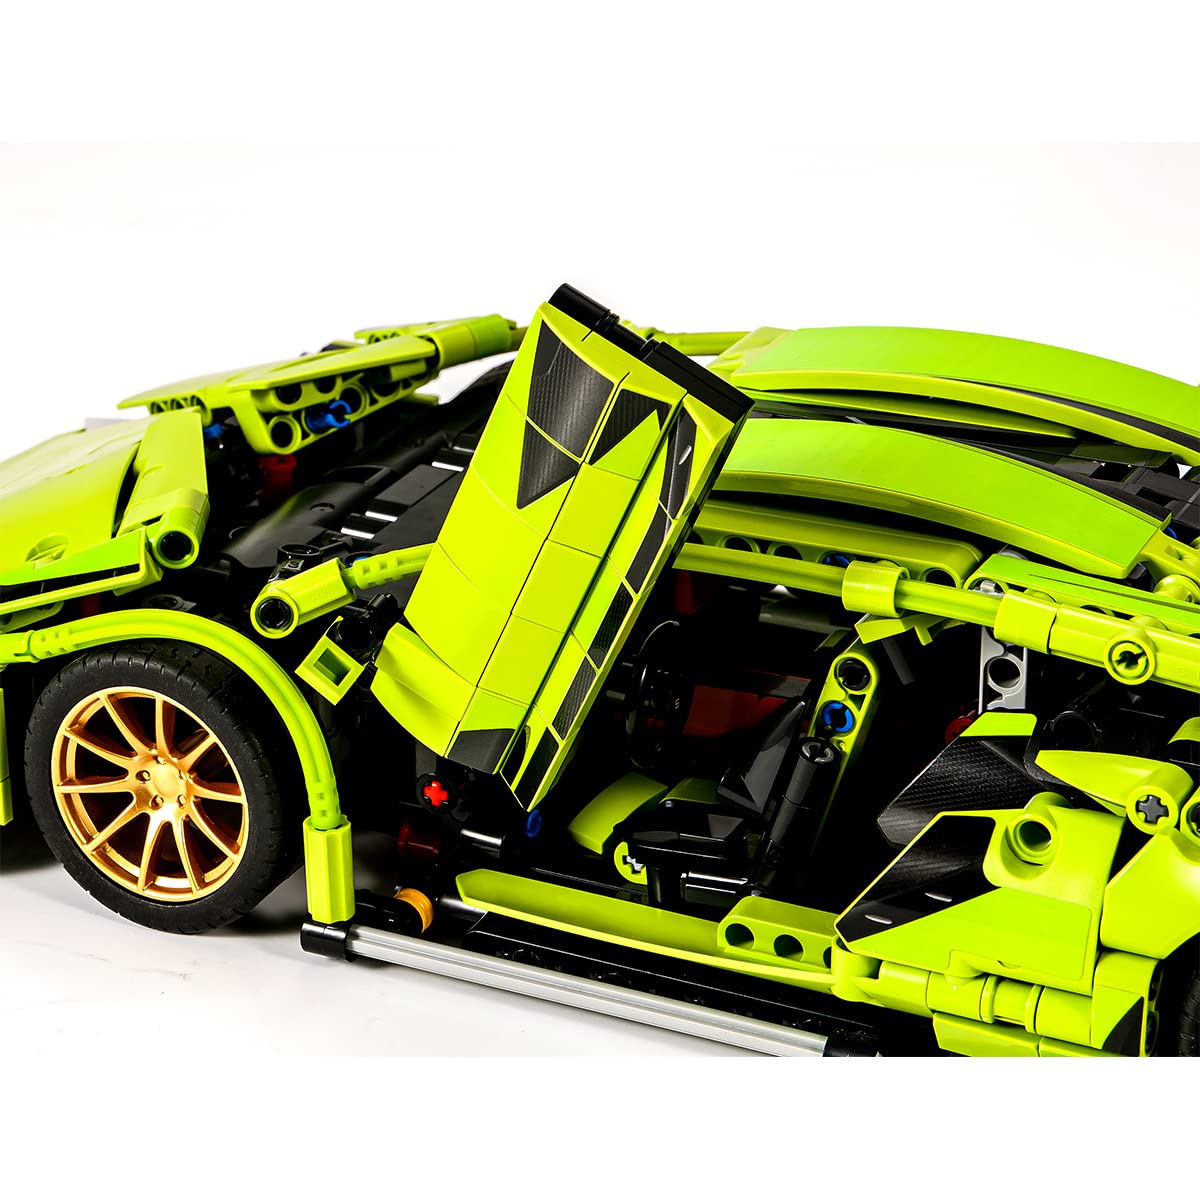 DAHONPA 绿色跑车 MOC 积木套件，1:14 比例跑车模型玩具（1268 件），成人和儿童礼物